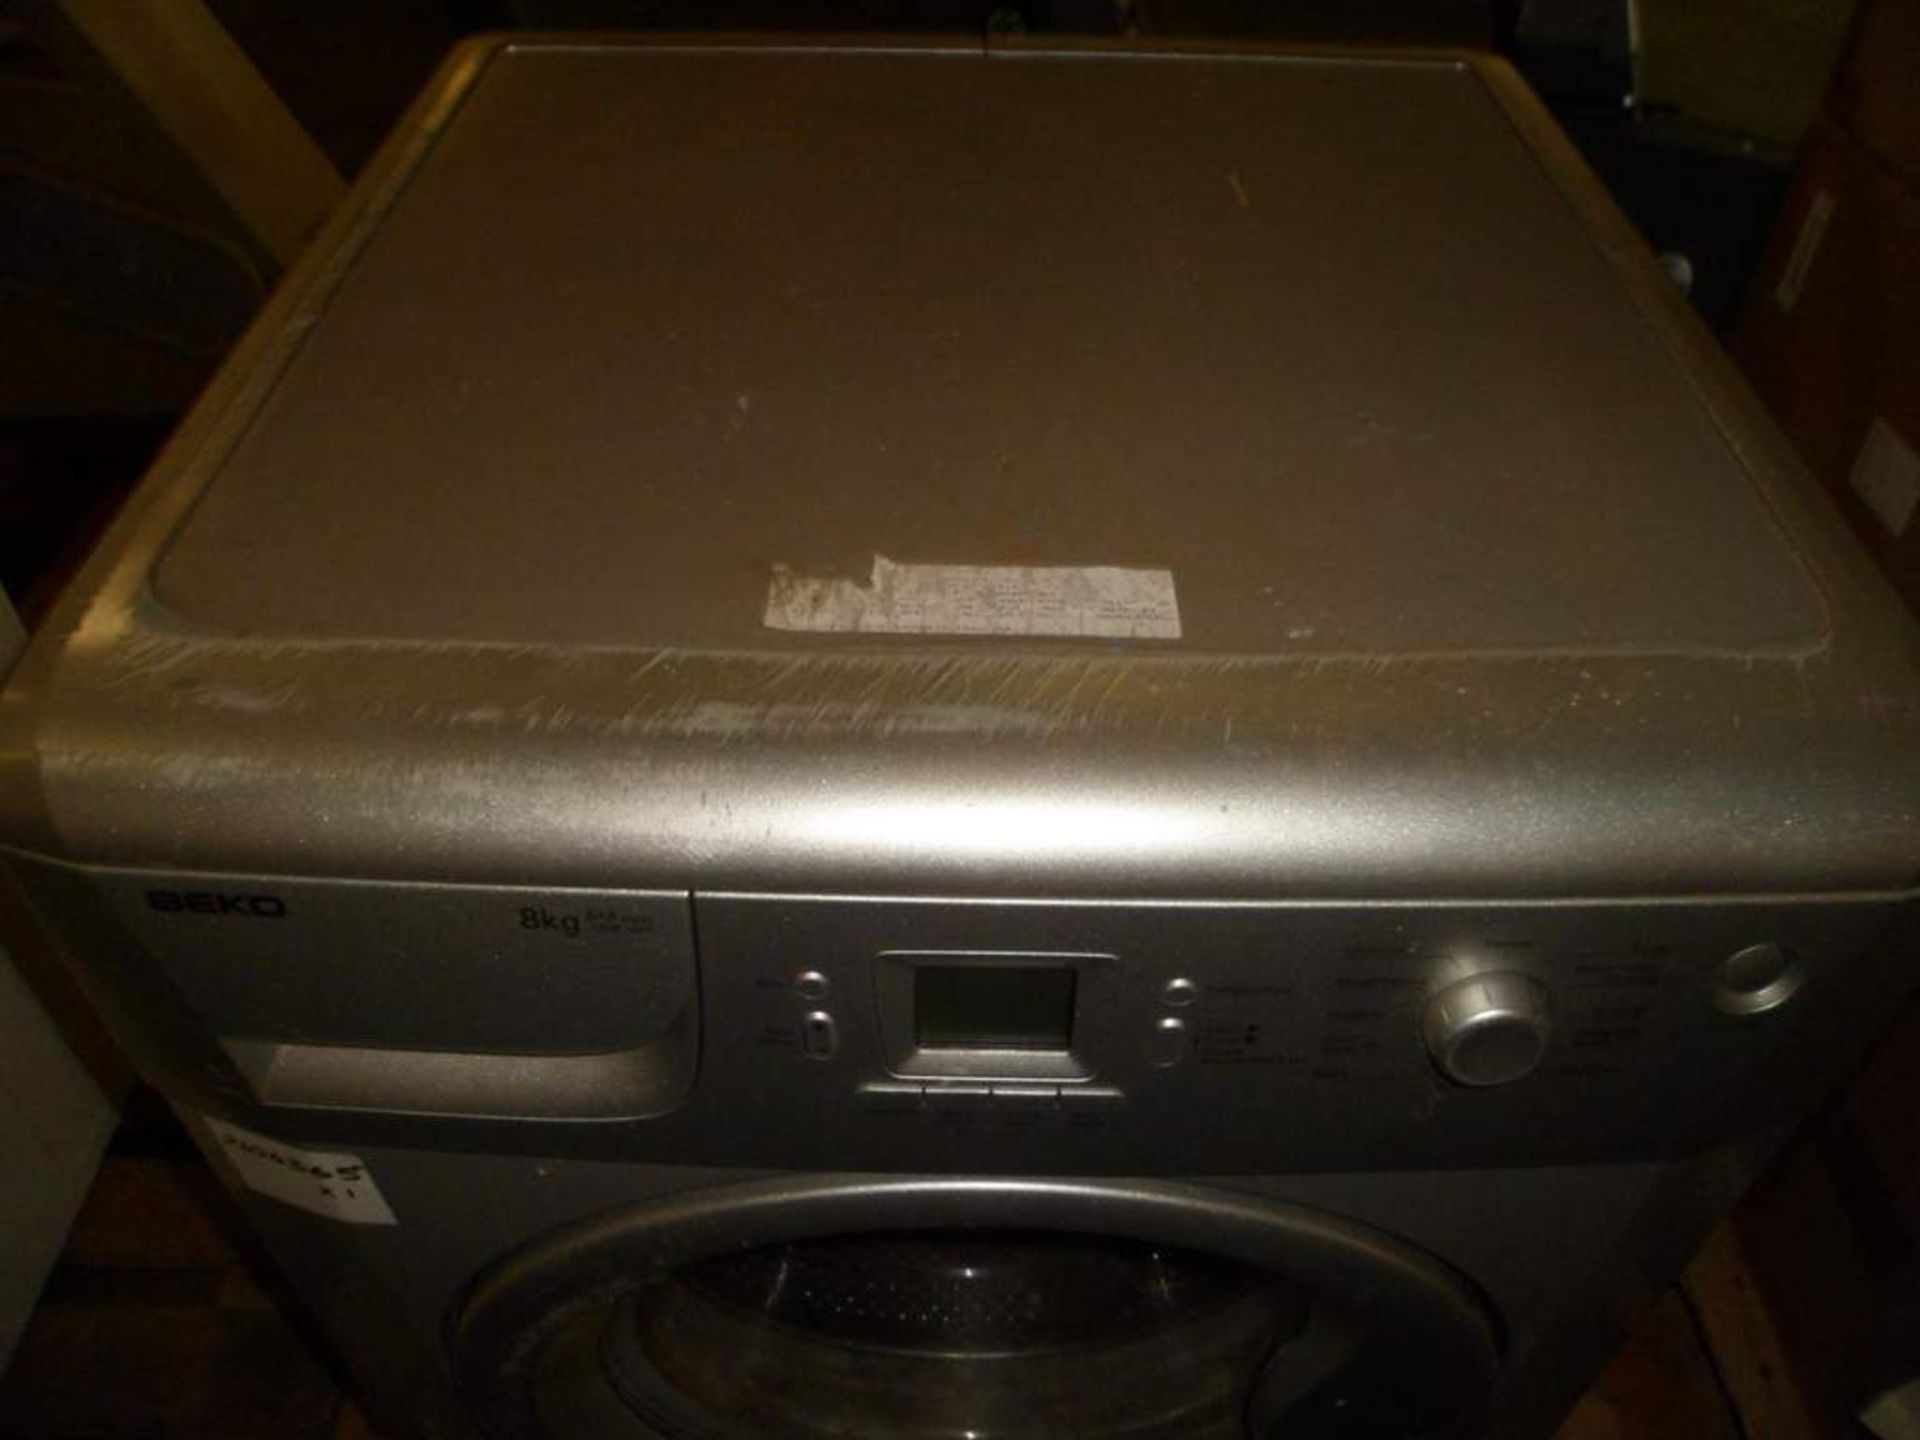 Beko 8kg washing machine - WME8227S - Image 2 of 2